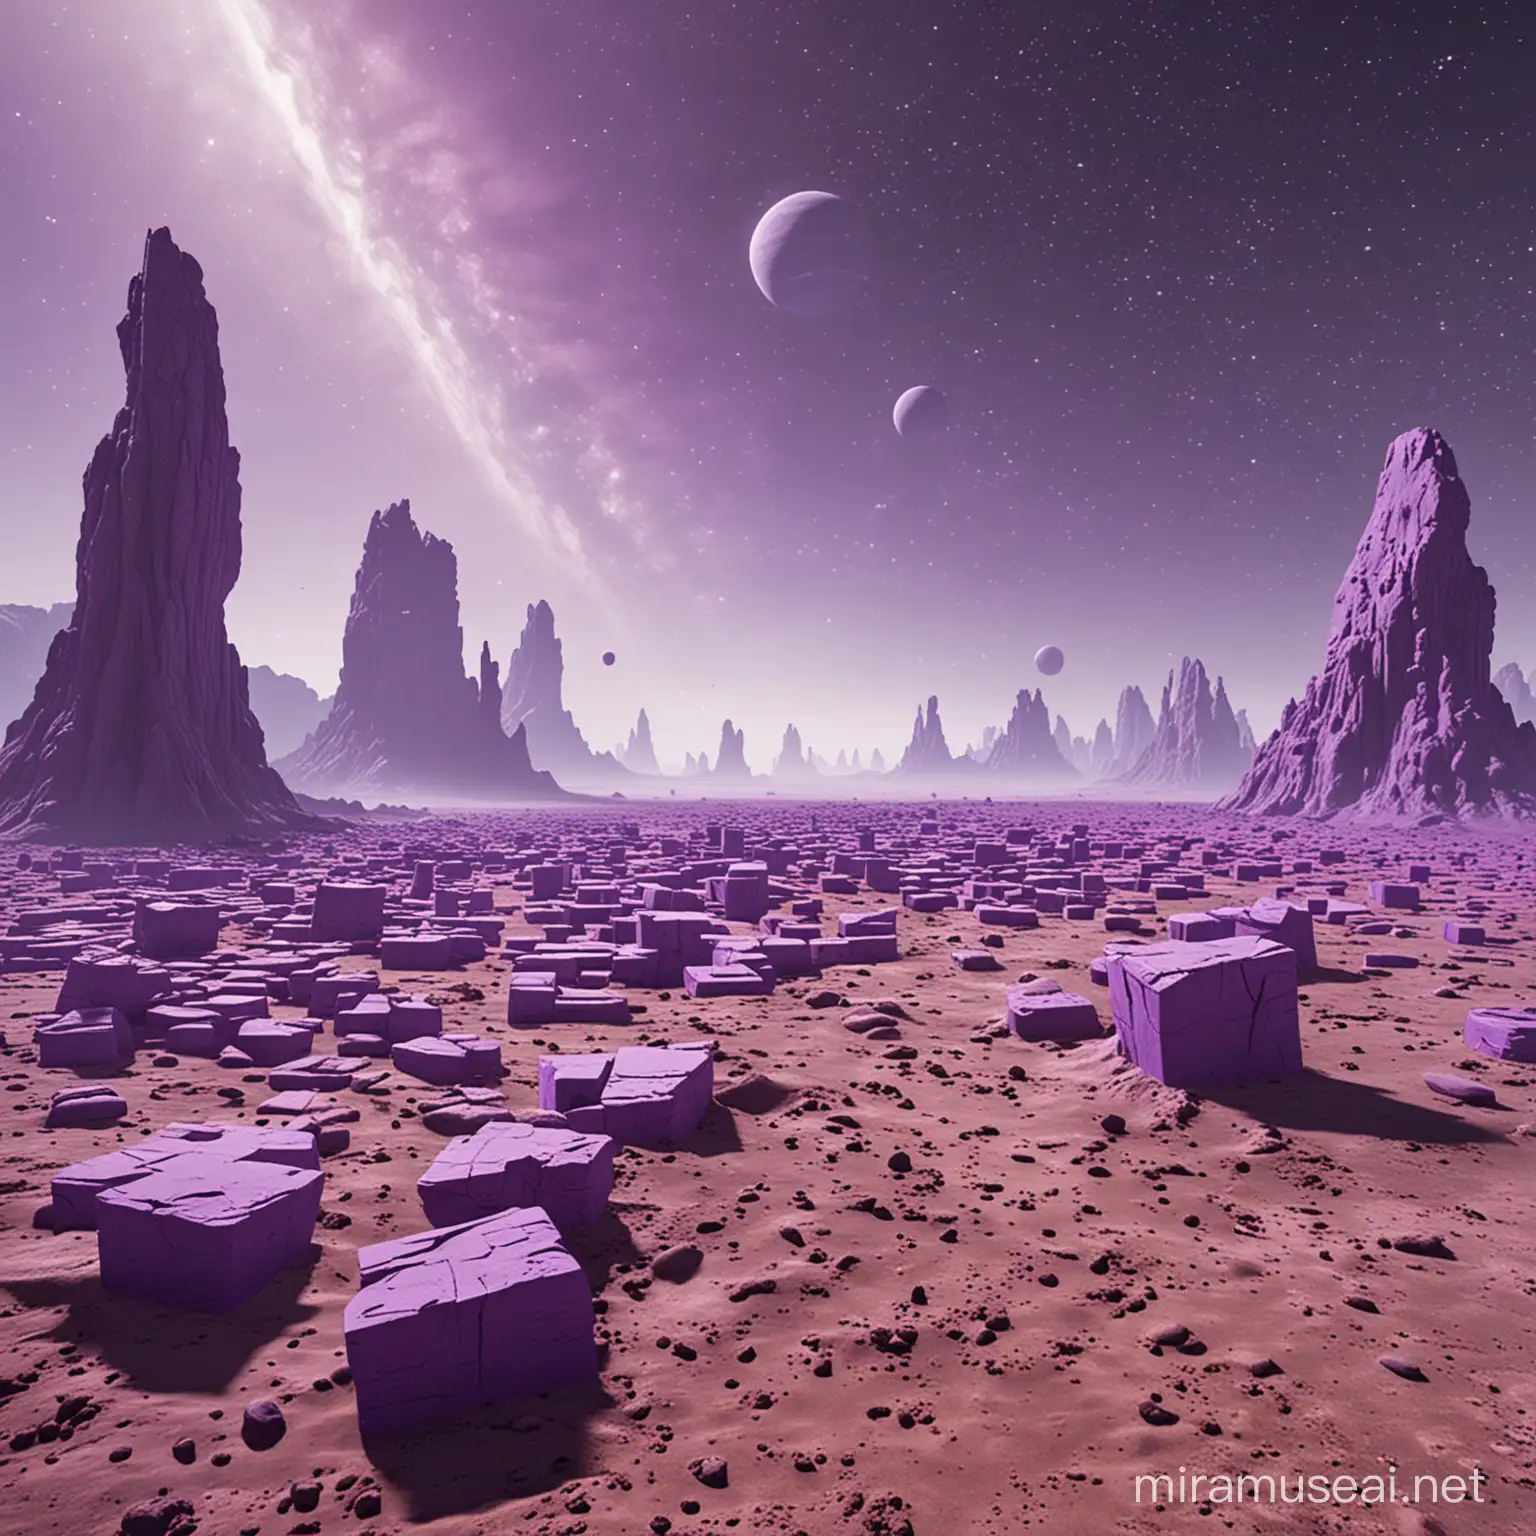 An alien landscape with large floating purple blocks